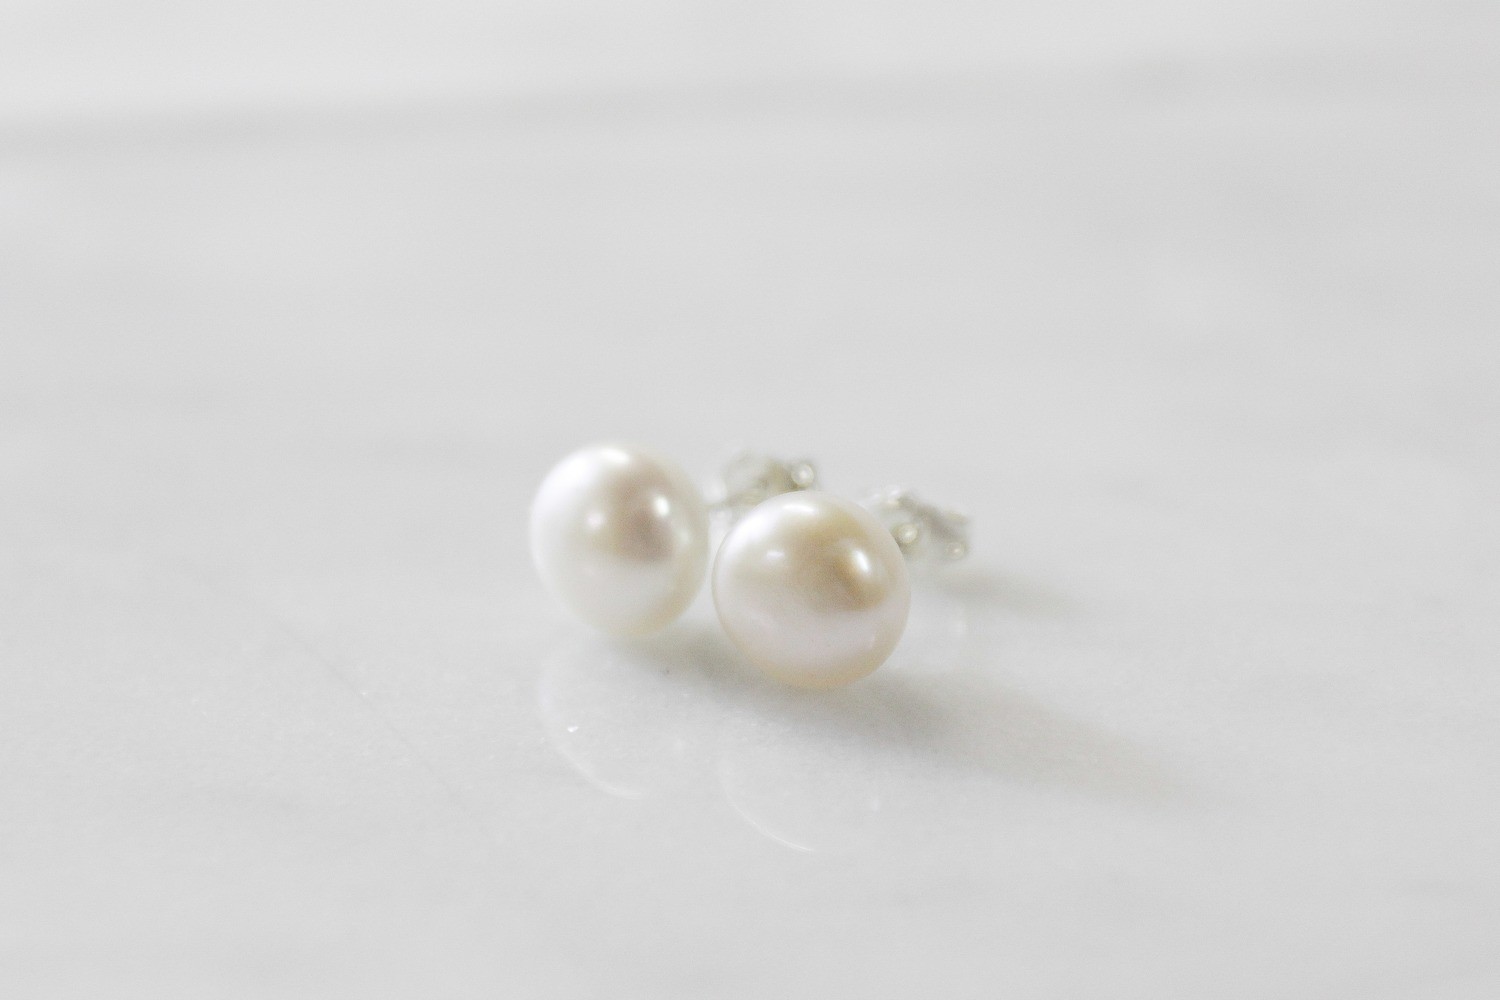 White Freshwater Pearl 8-9mm, studs earrings, sterling silver backs